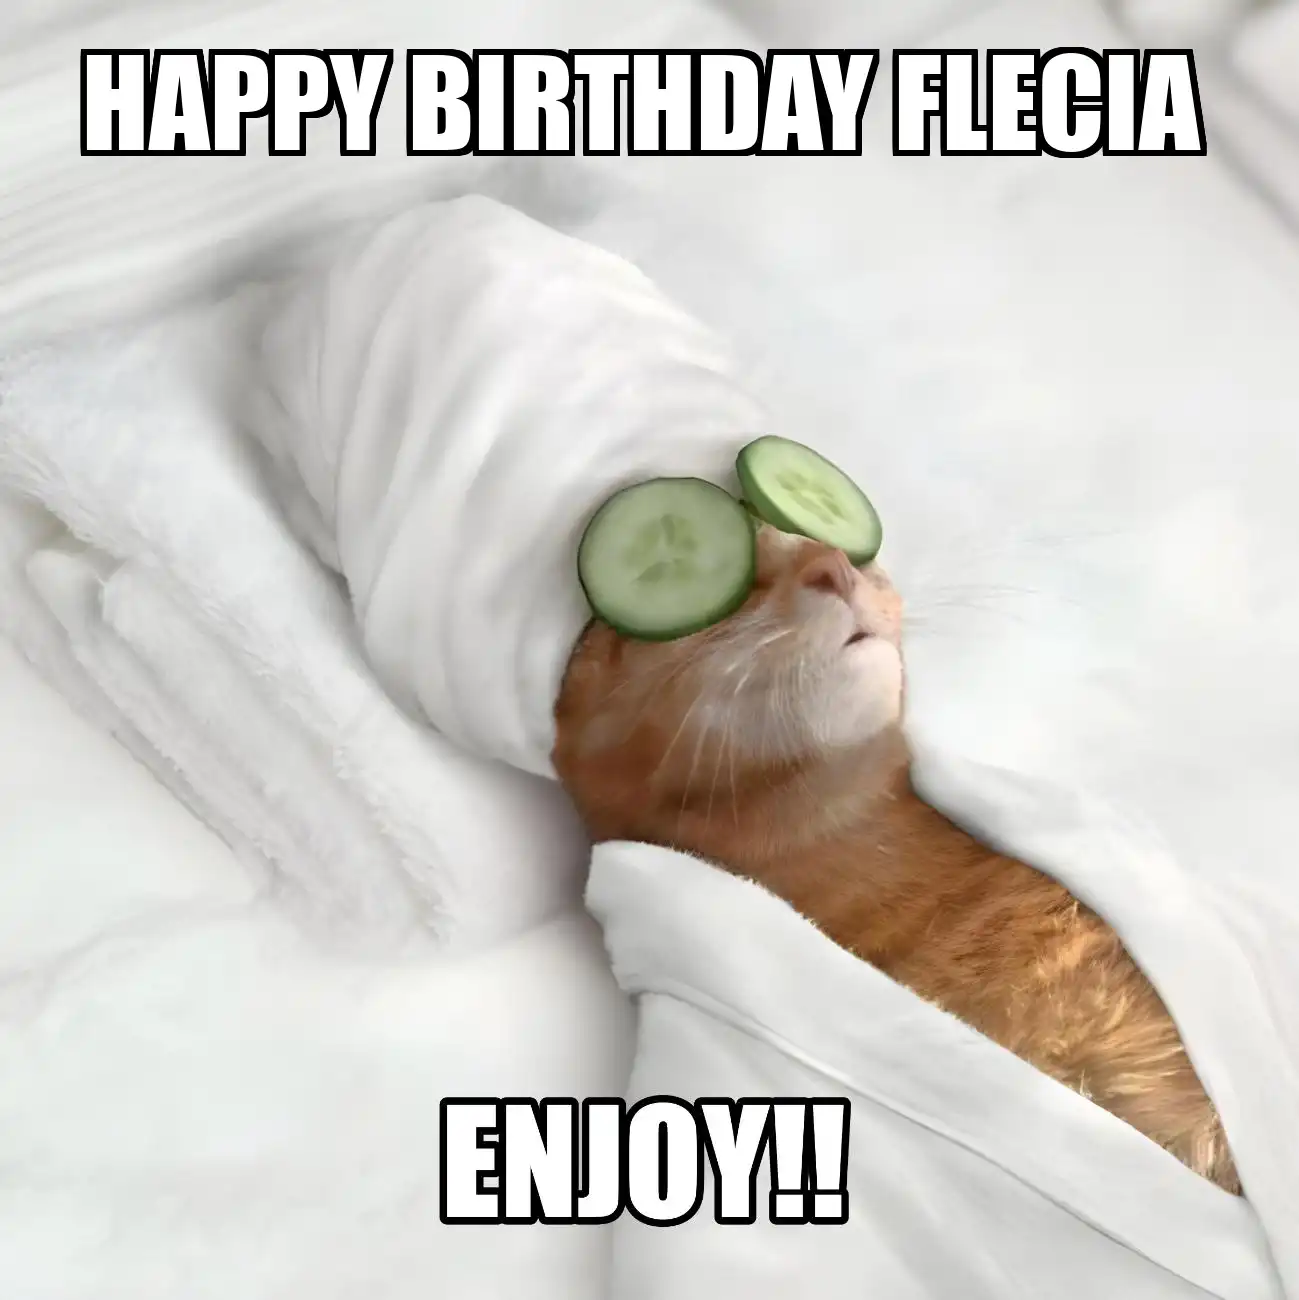 Happy Birthday Flecia Enjoy Cat Meme